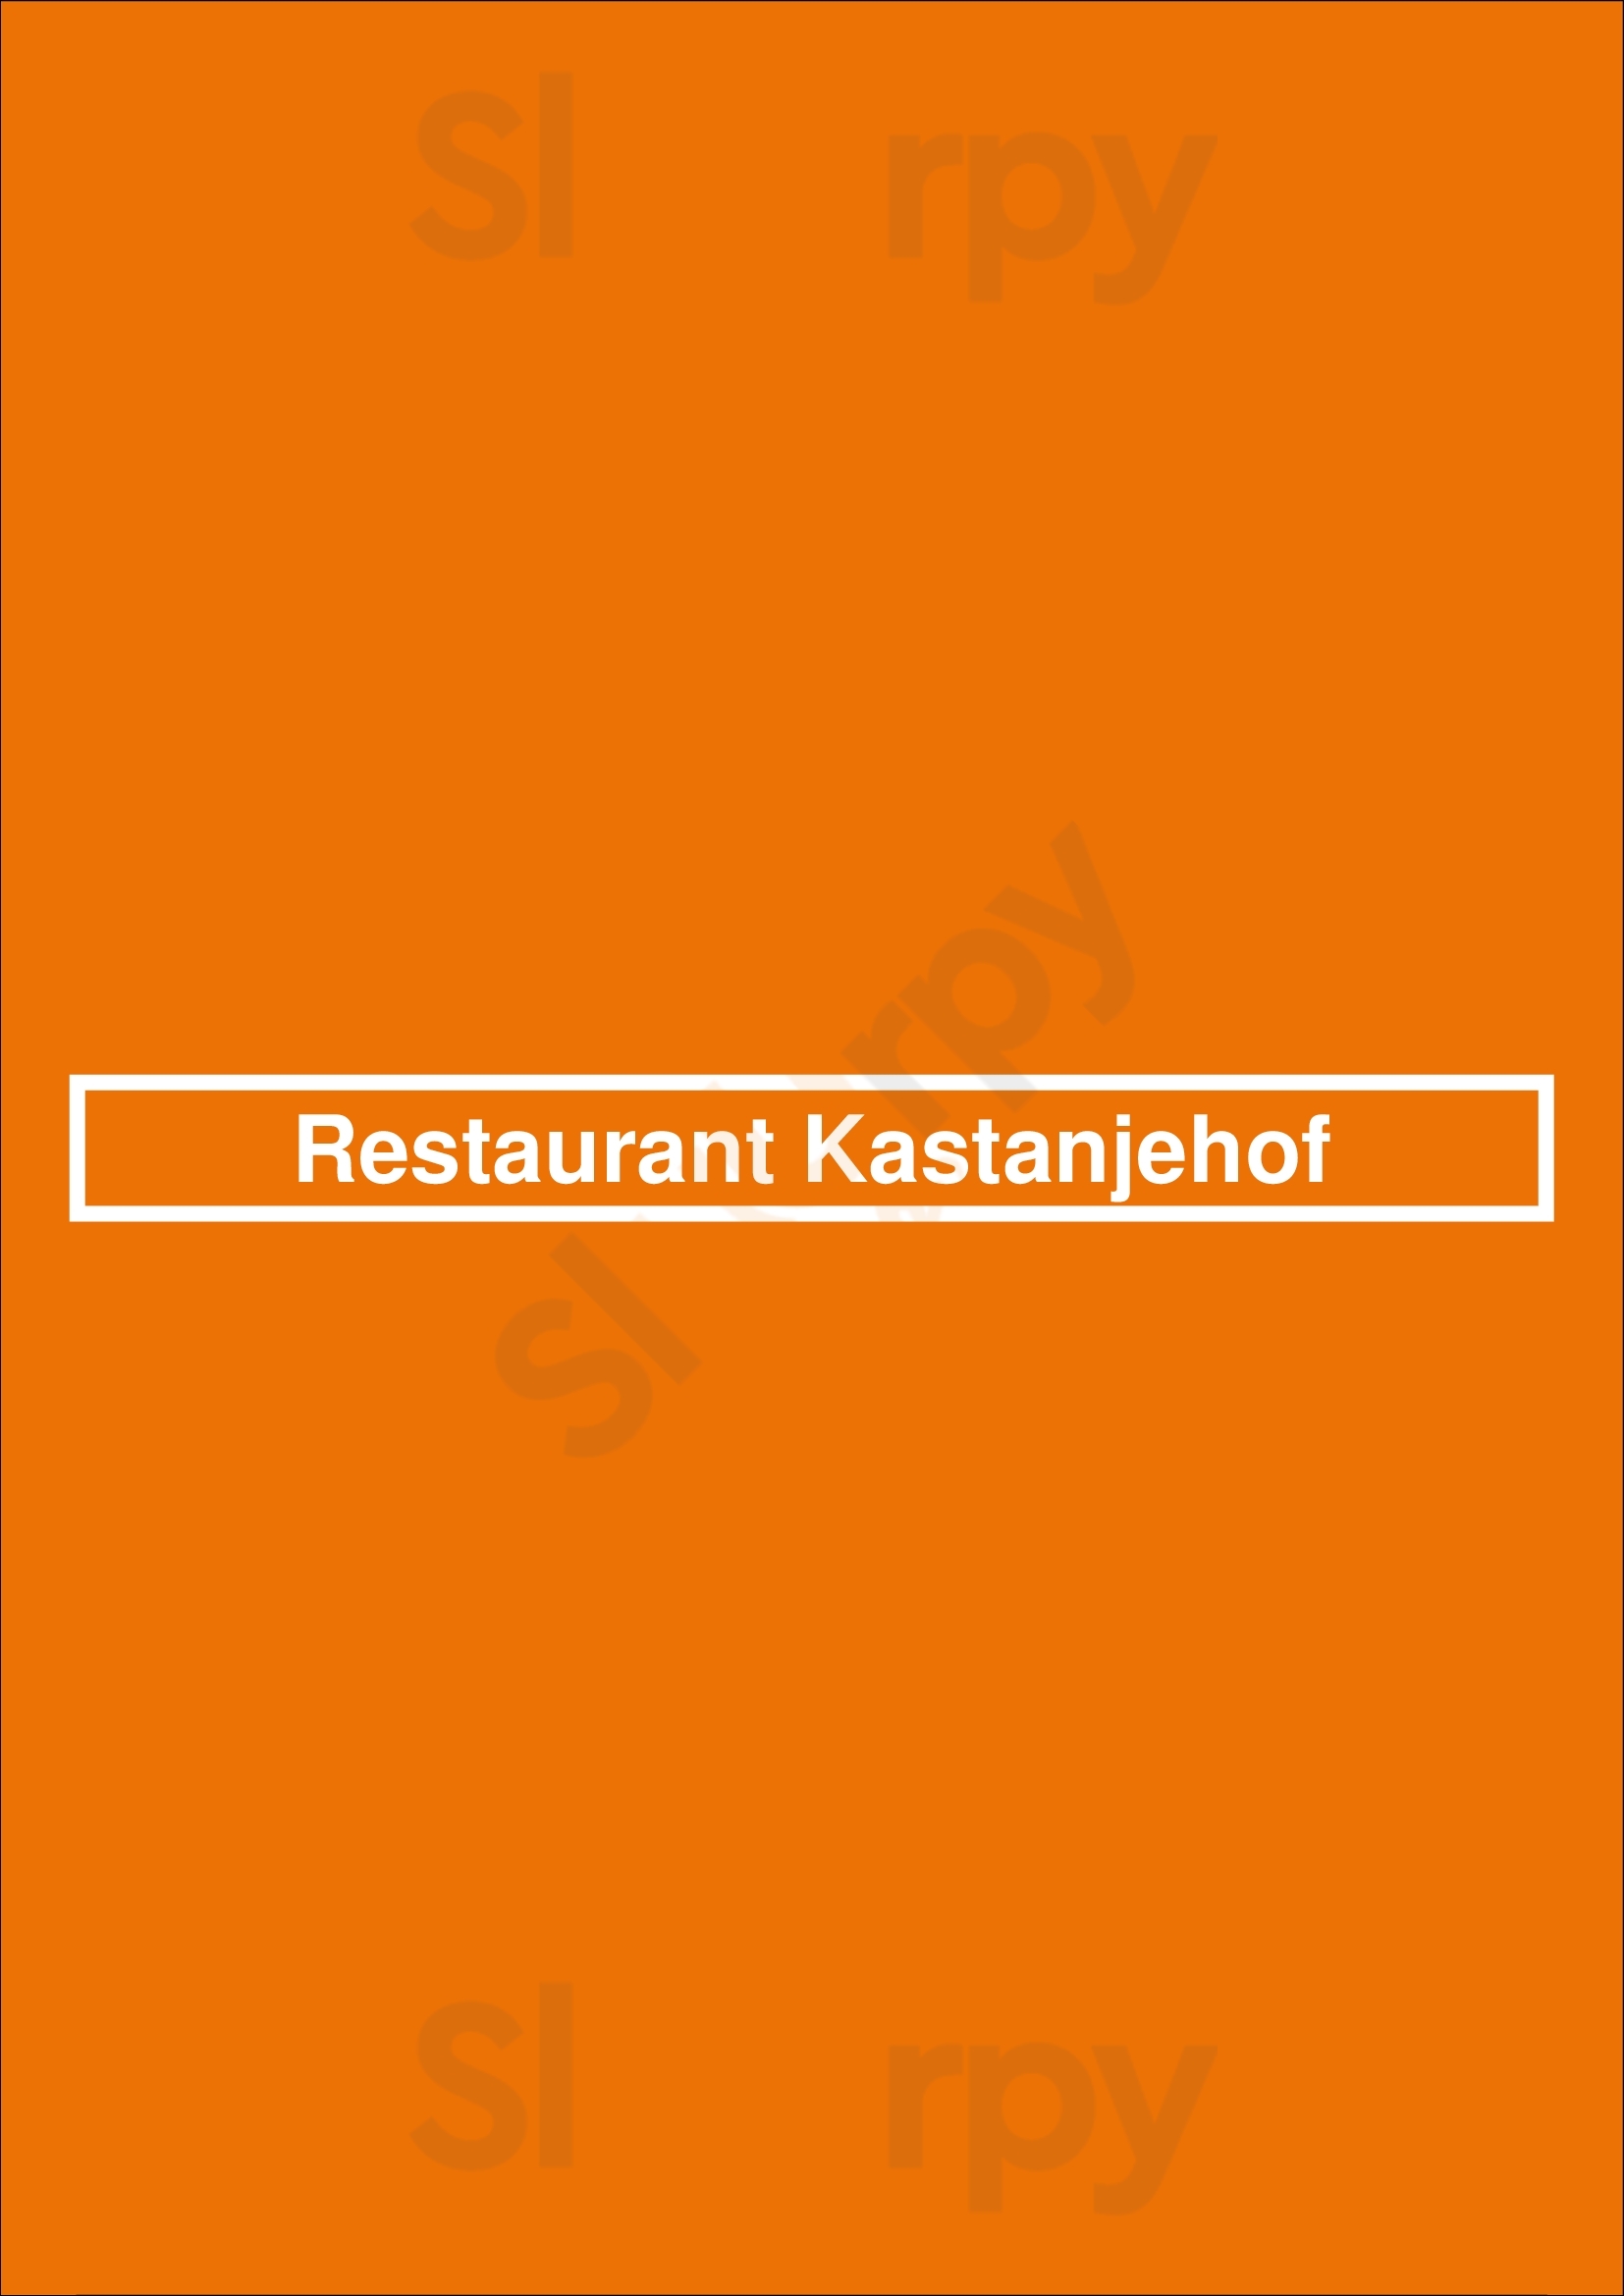 Restaurant Kastanjehof Gemert Menu - 1